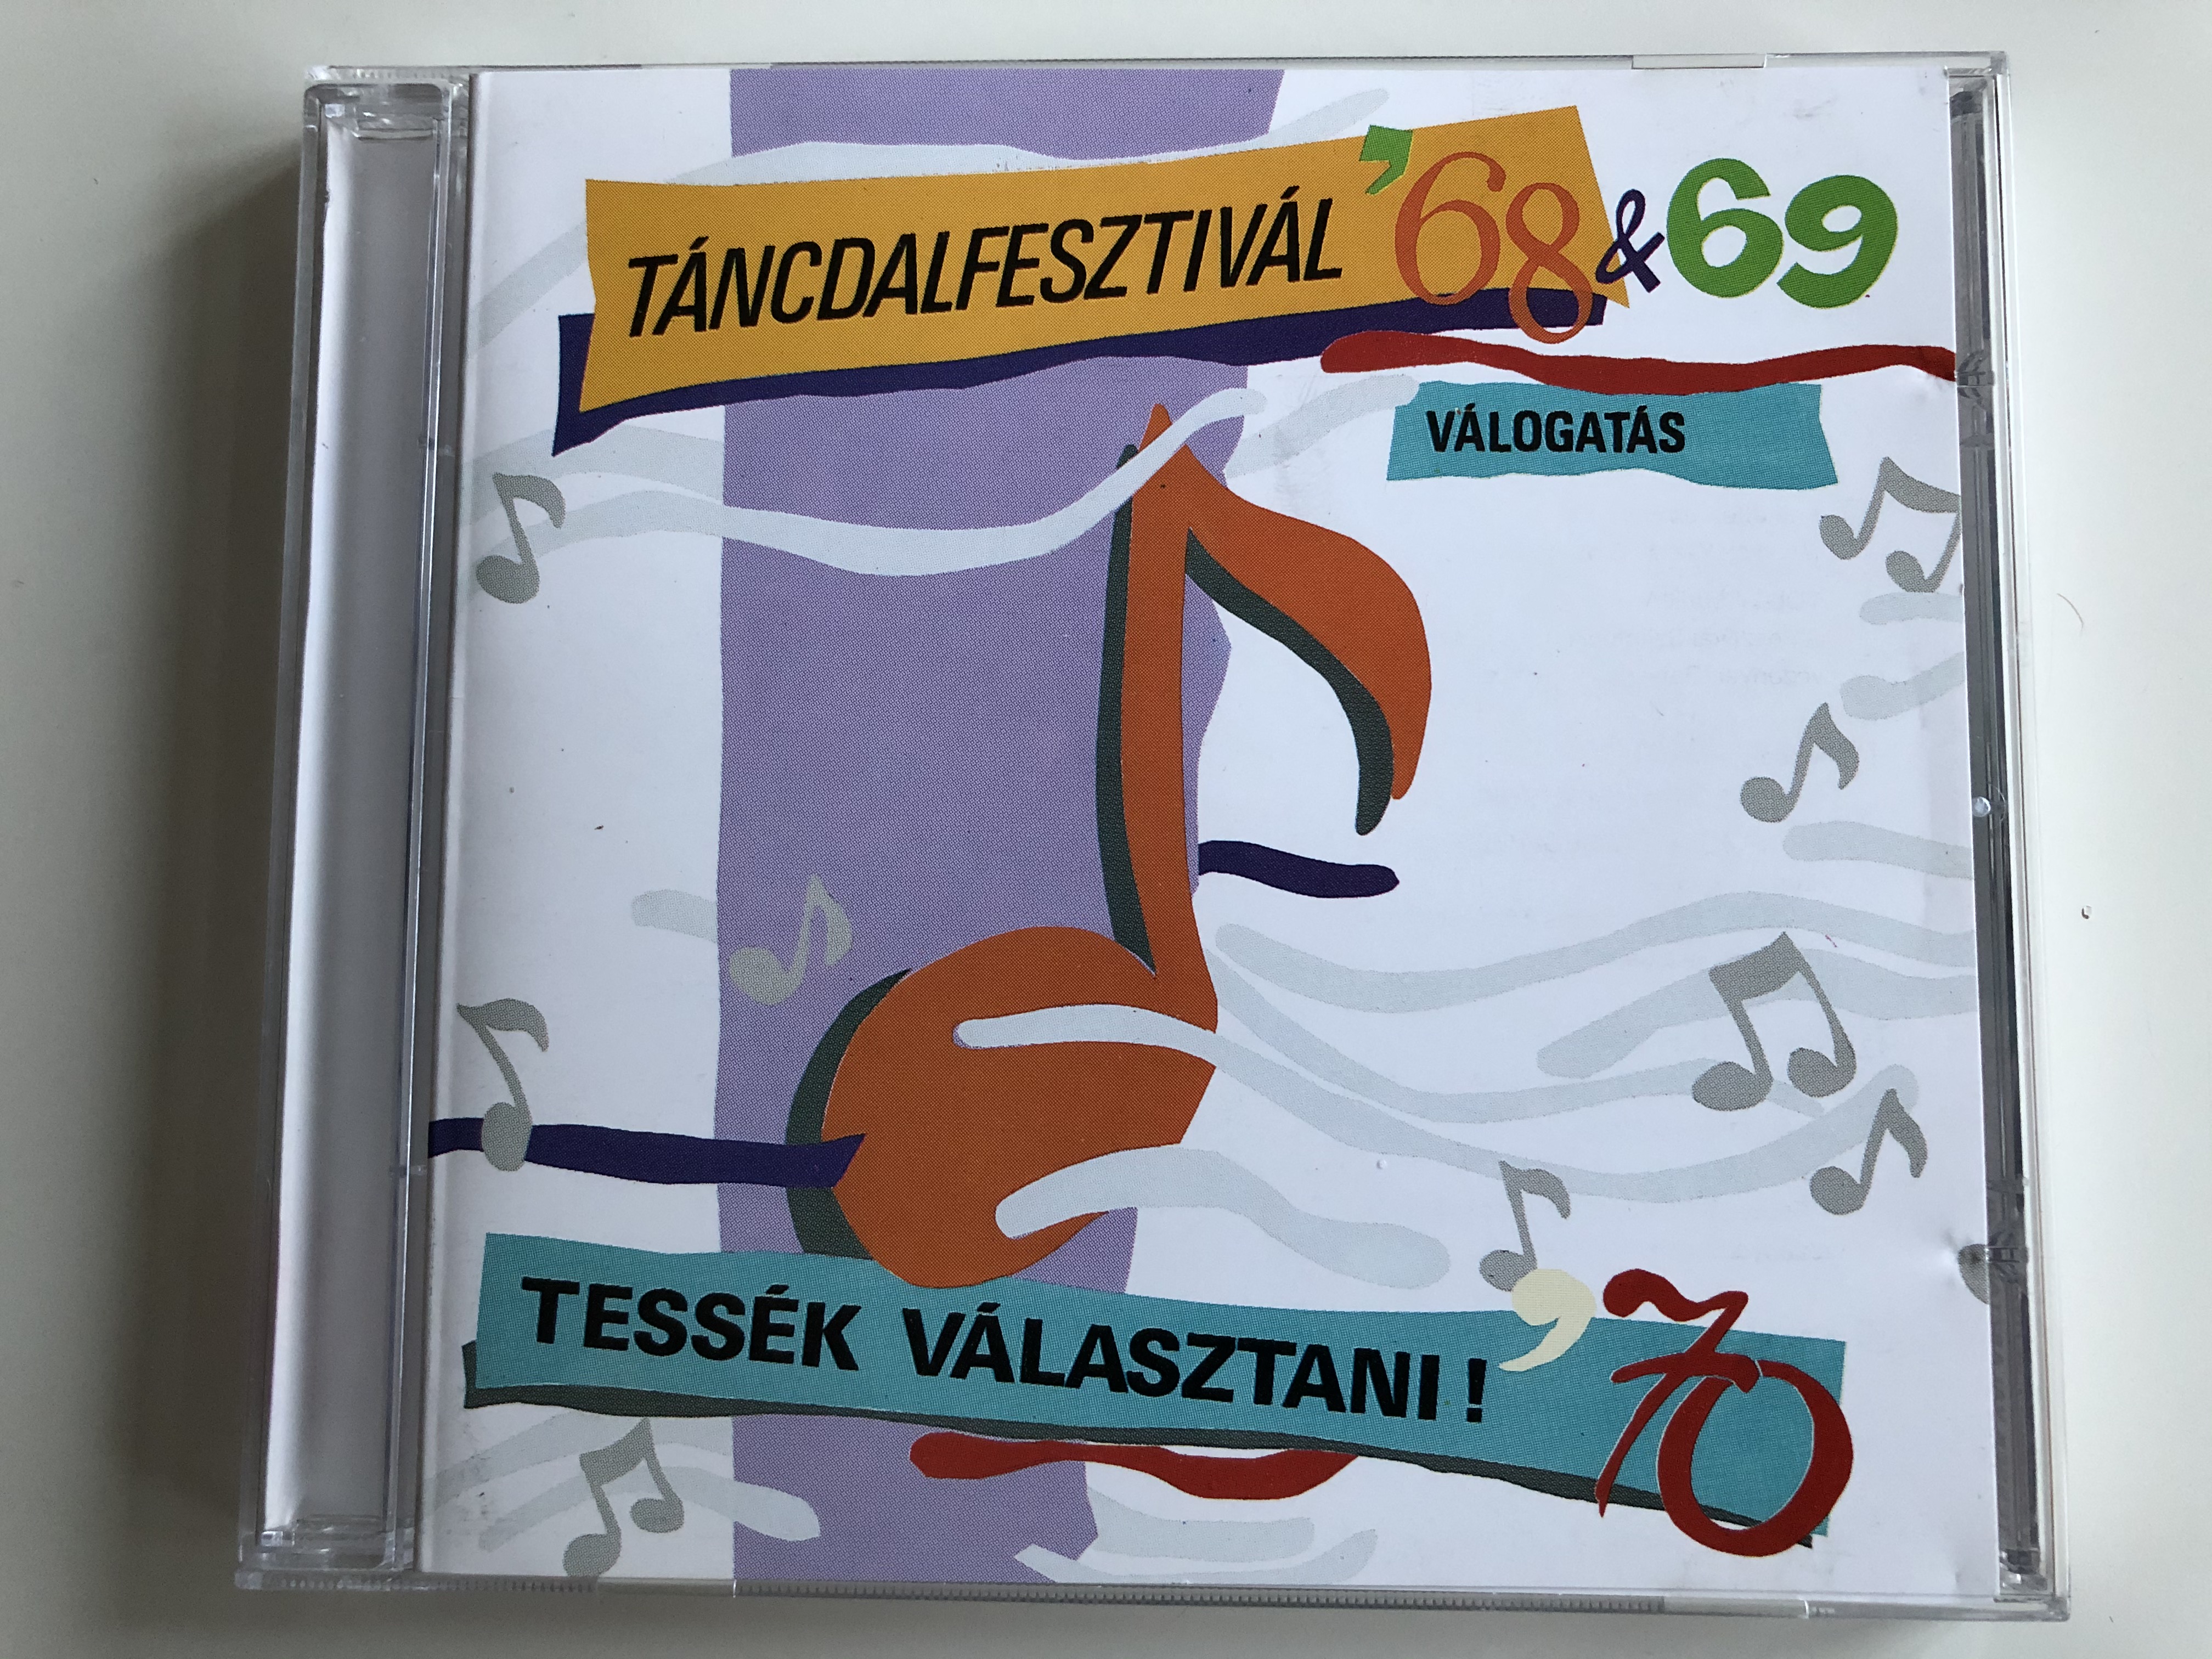 t-ncdalfesztiv-l-68-69-tess-k-v-lasztani-70-gong-audio-cd-1994-hcd-37688-1-.jpg